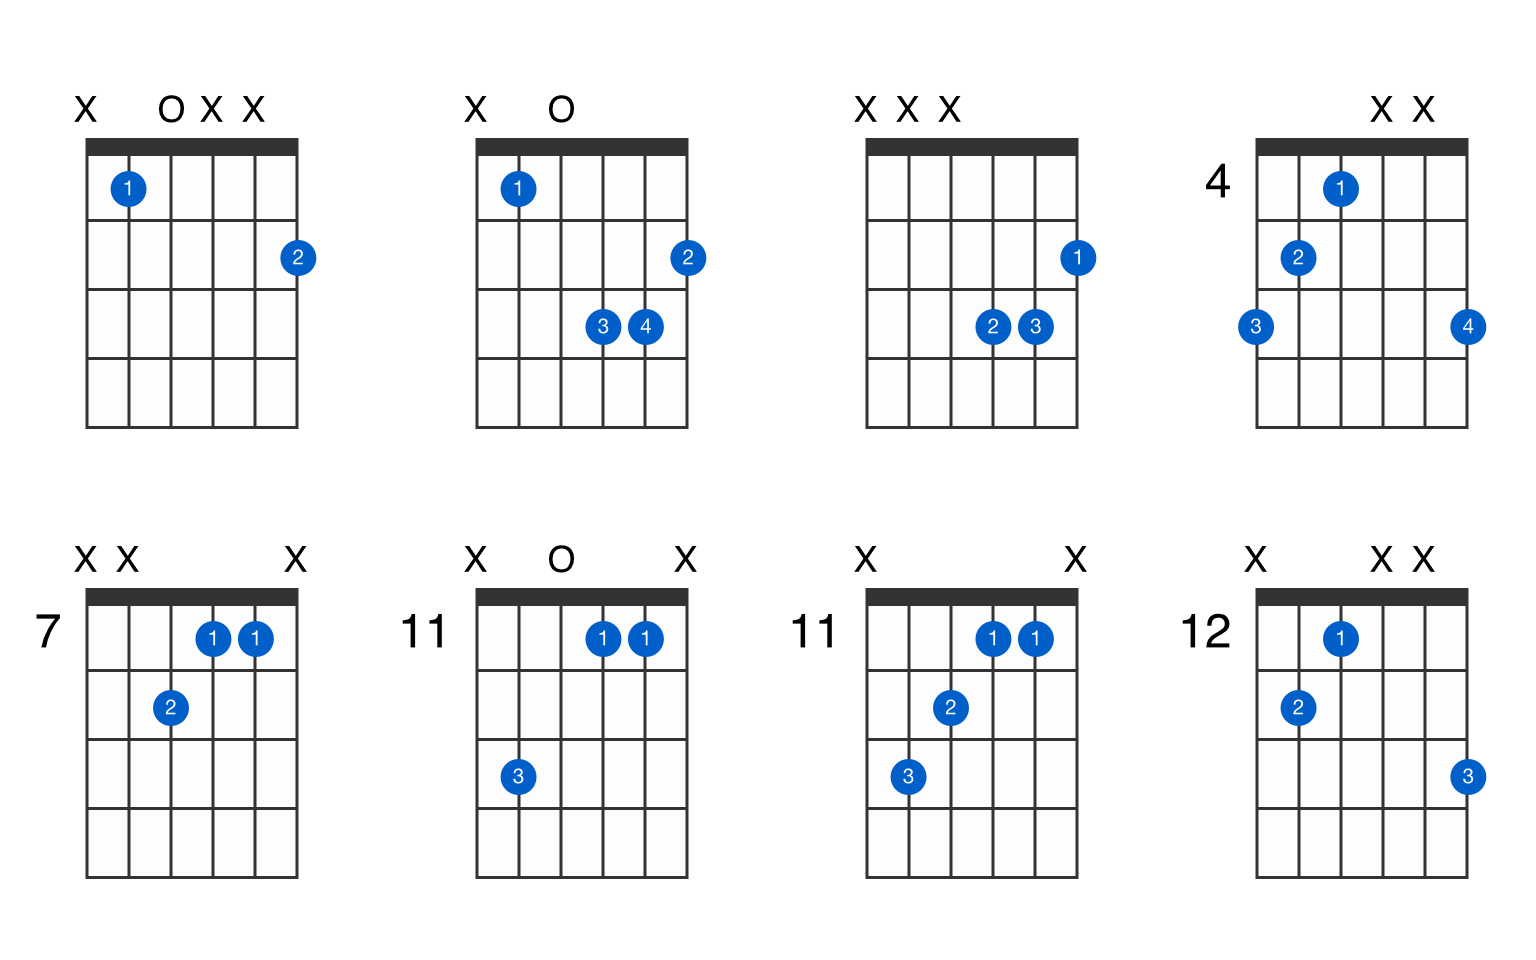 b flat chord progression